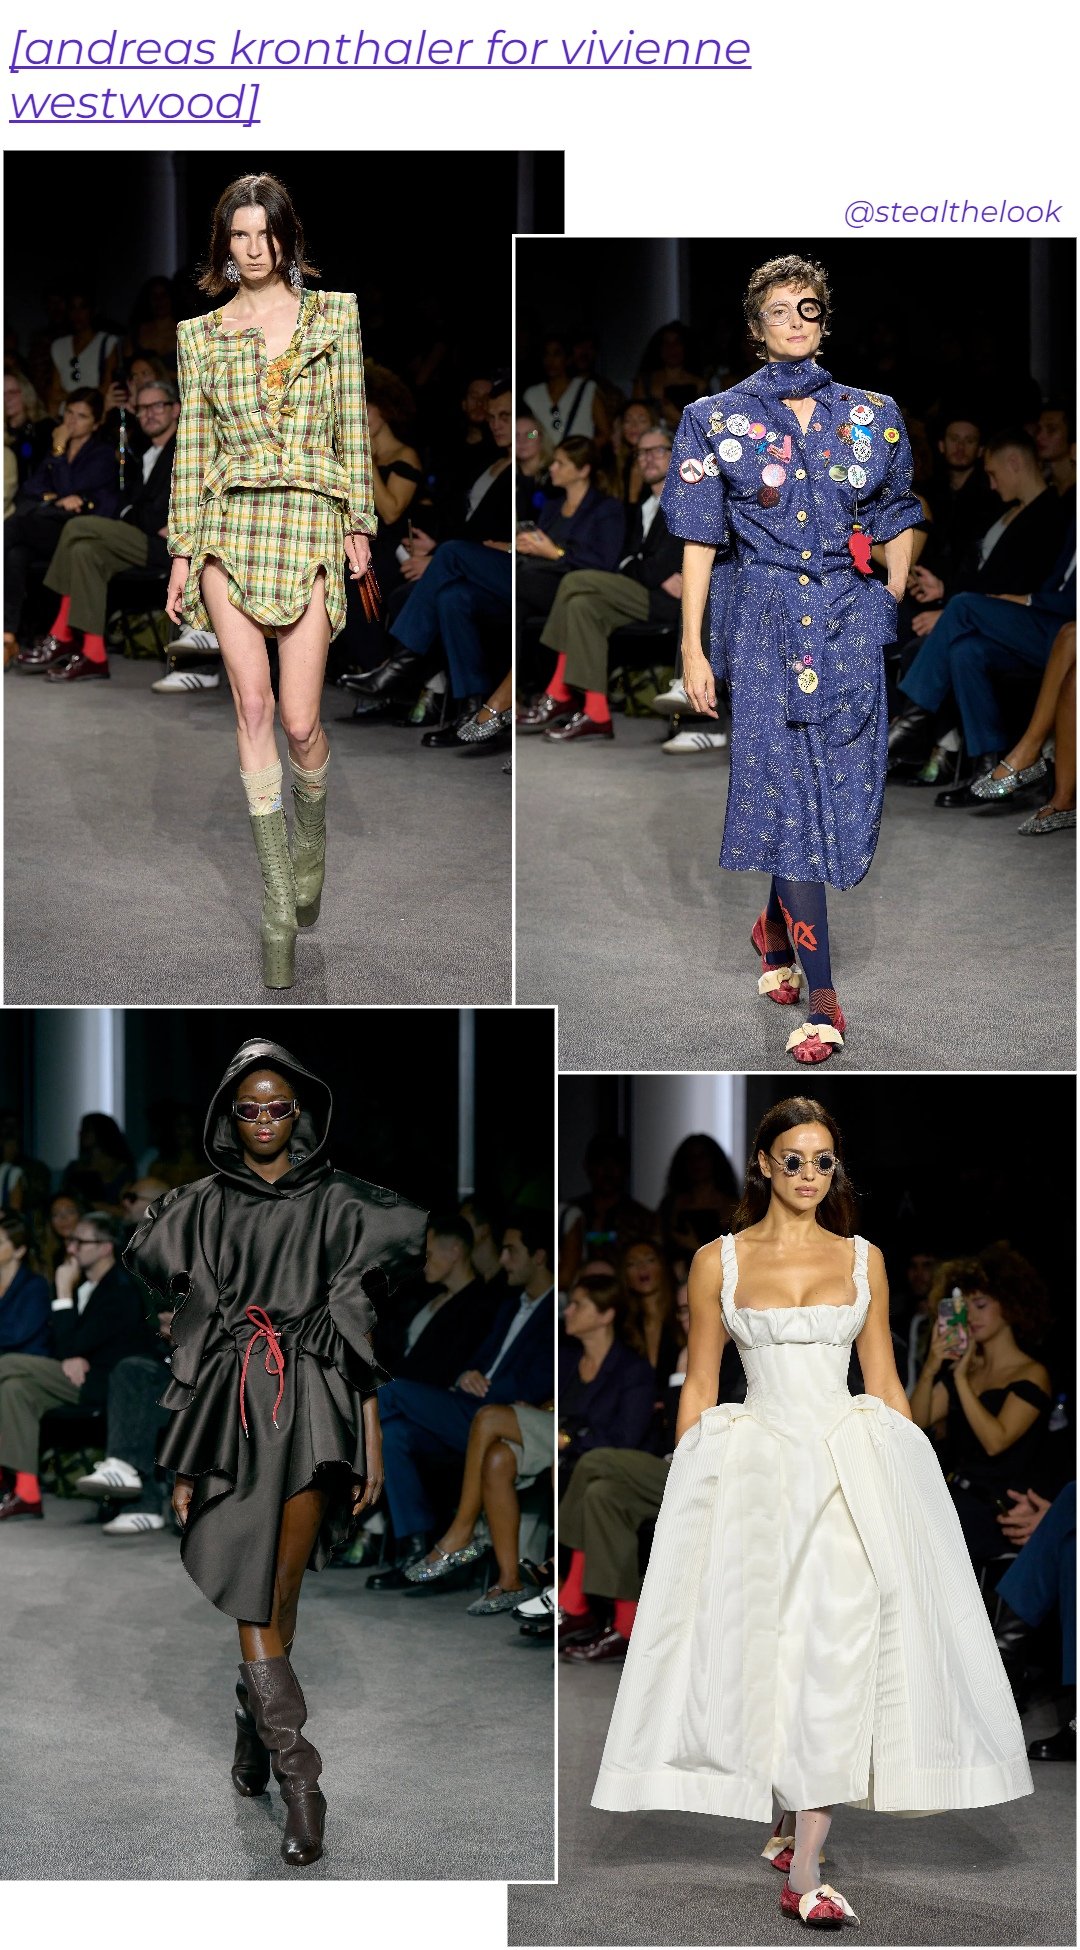 Andreas Kronthaler for Vivienne Westwood - roupas diversas - Paris Fashion Week - verão - colagem de imagens - https://stealthelook.com.br